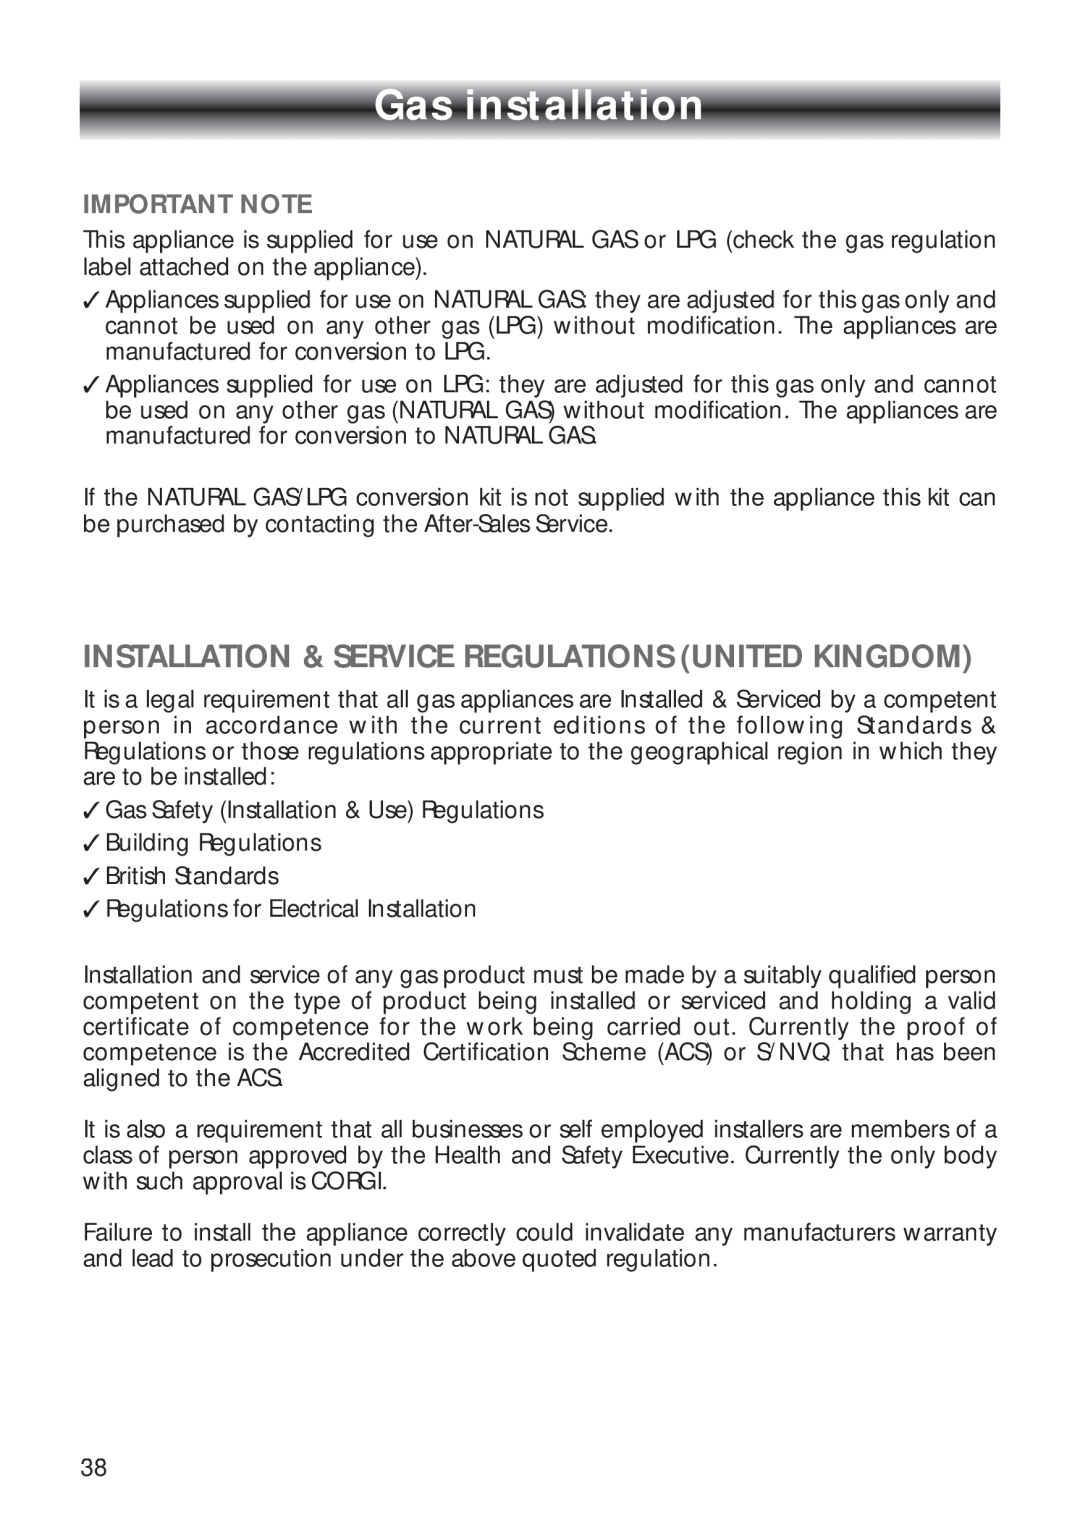 CDA RV 700 installation instructions Gas installation, Installation & Service Regulations United Kingdom, Important Note 